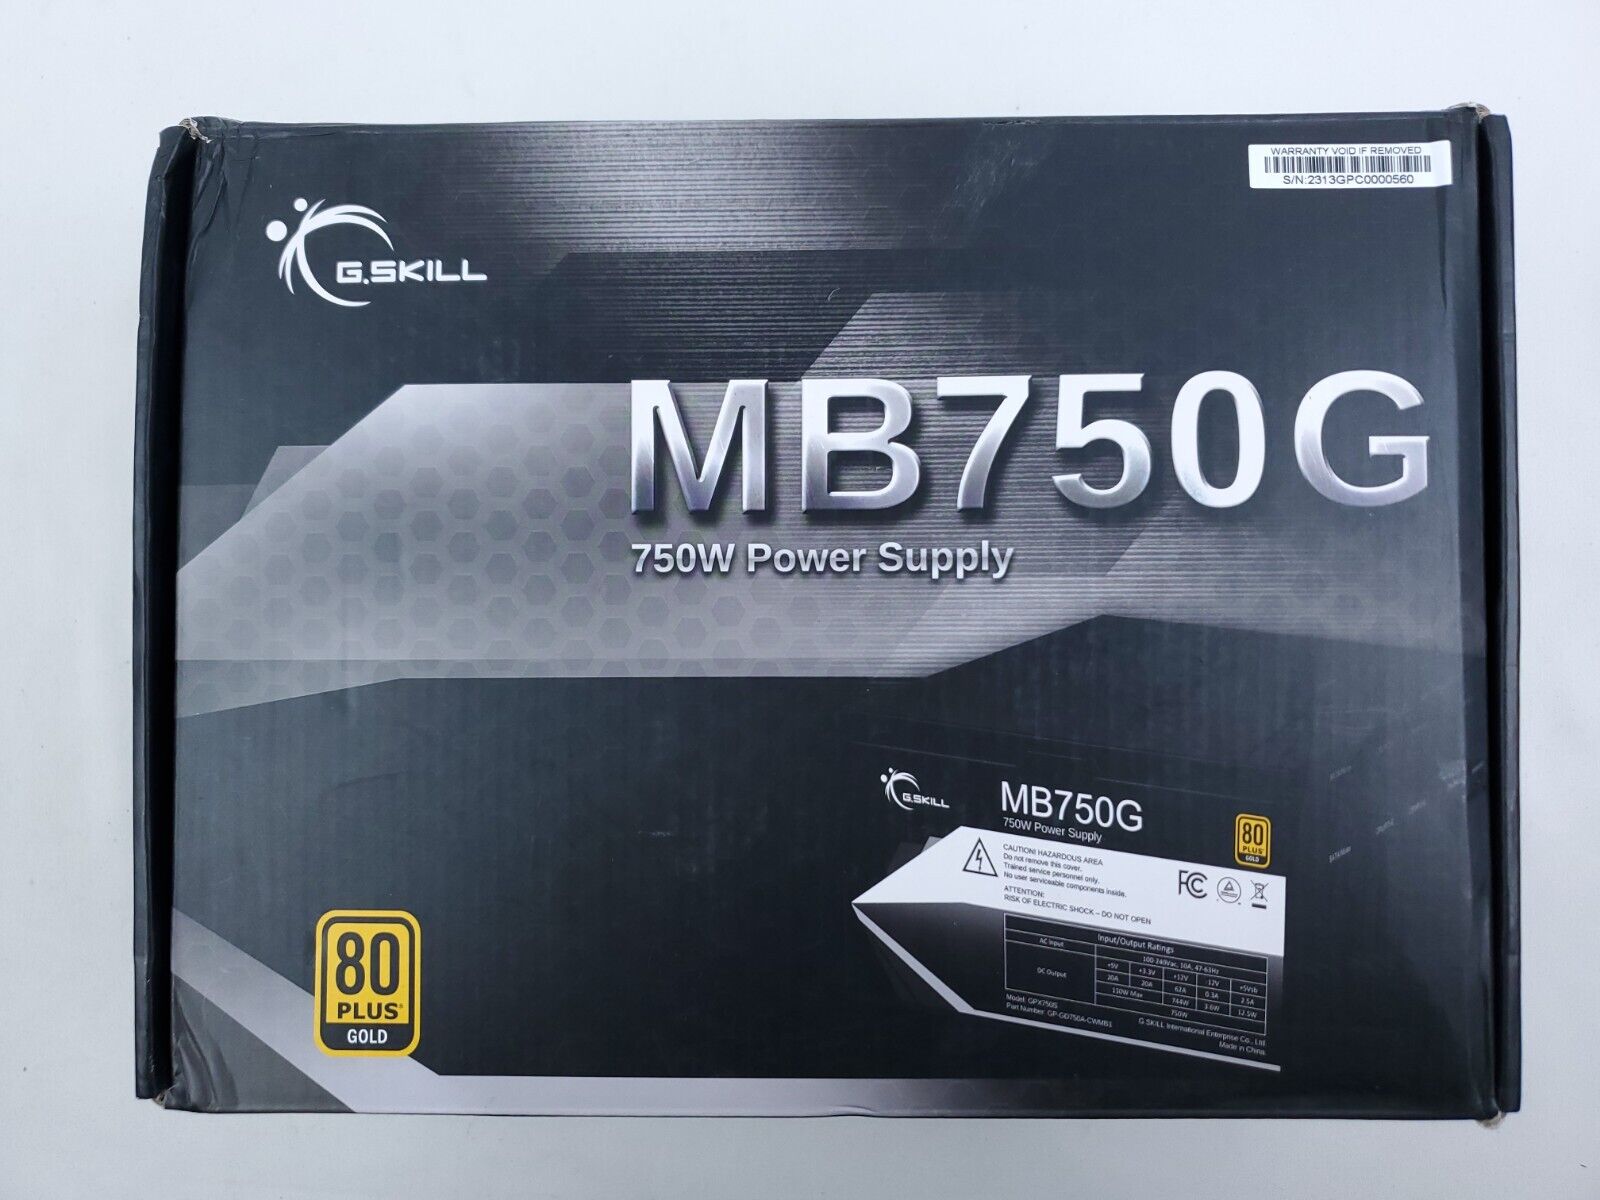 G.Skill MB750G, 750W 80 Plus Gold Power Supply (OPEN BOX)